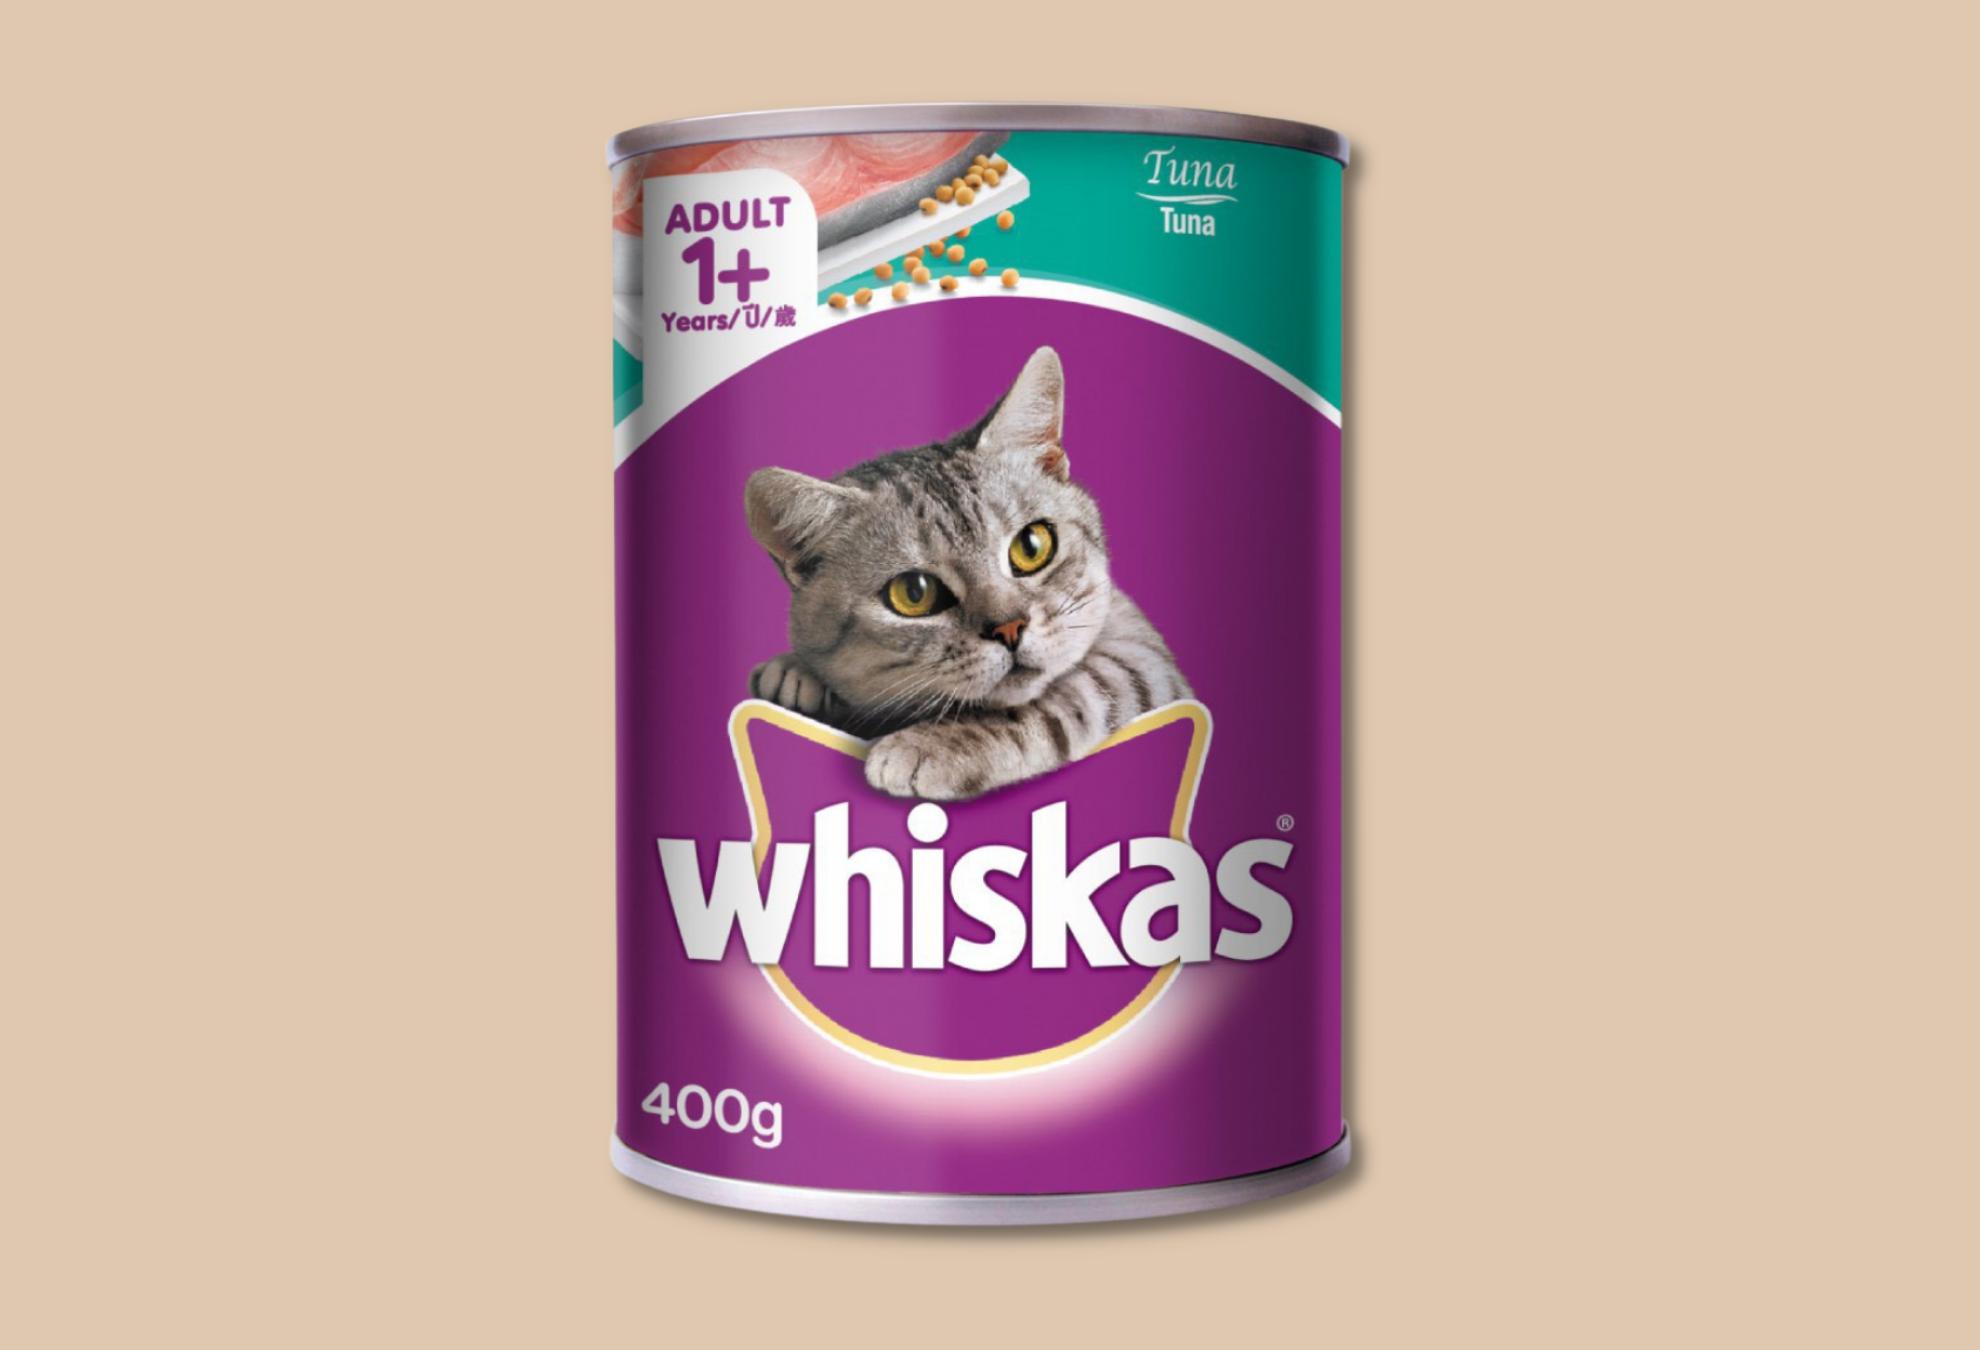 Whiskas - Pate Cho Mèo 400g